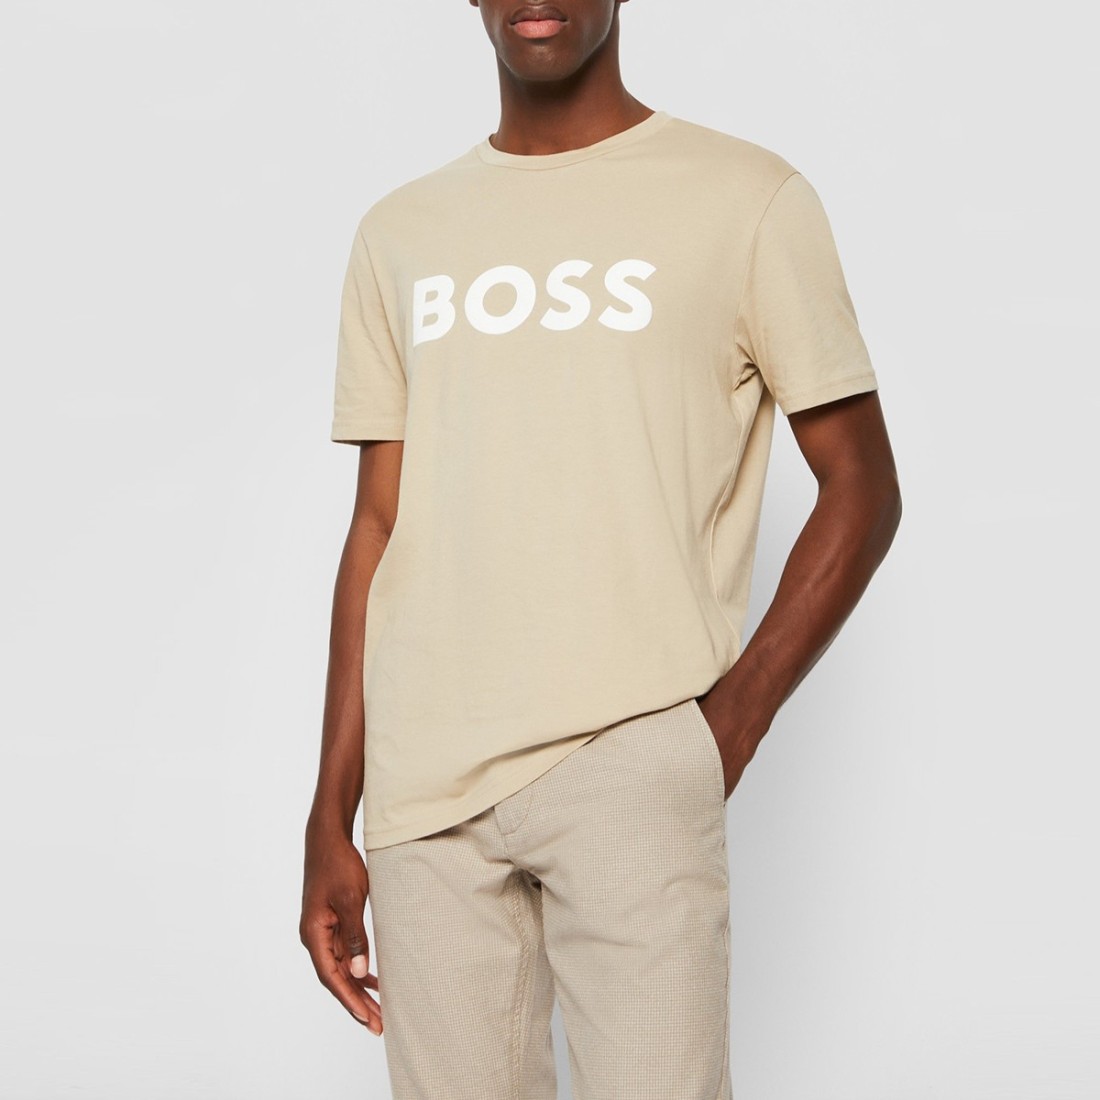 Image of BOSS - T-shirt Thinking - Colore: Beige,Taglia: L